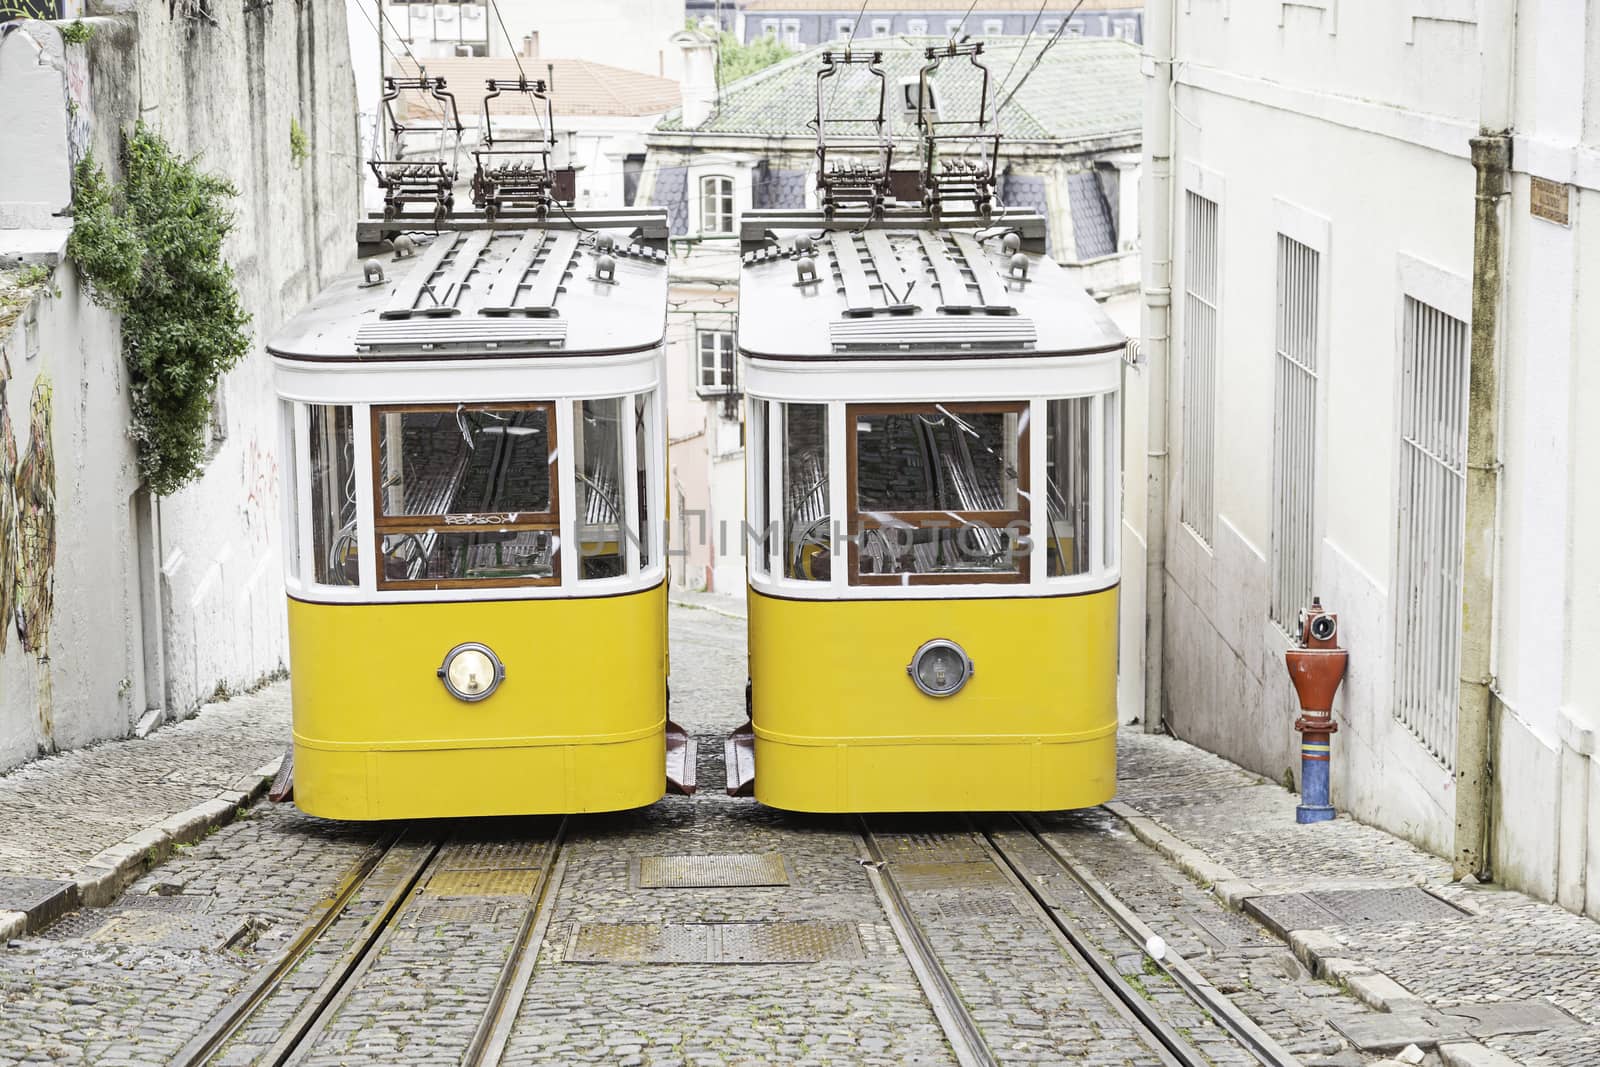 Old Lisbon tram by esebene